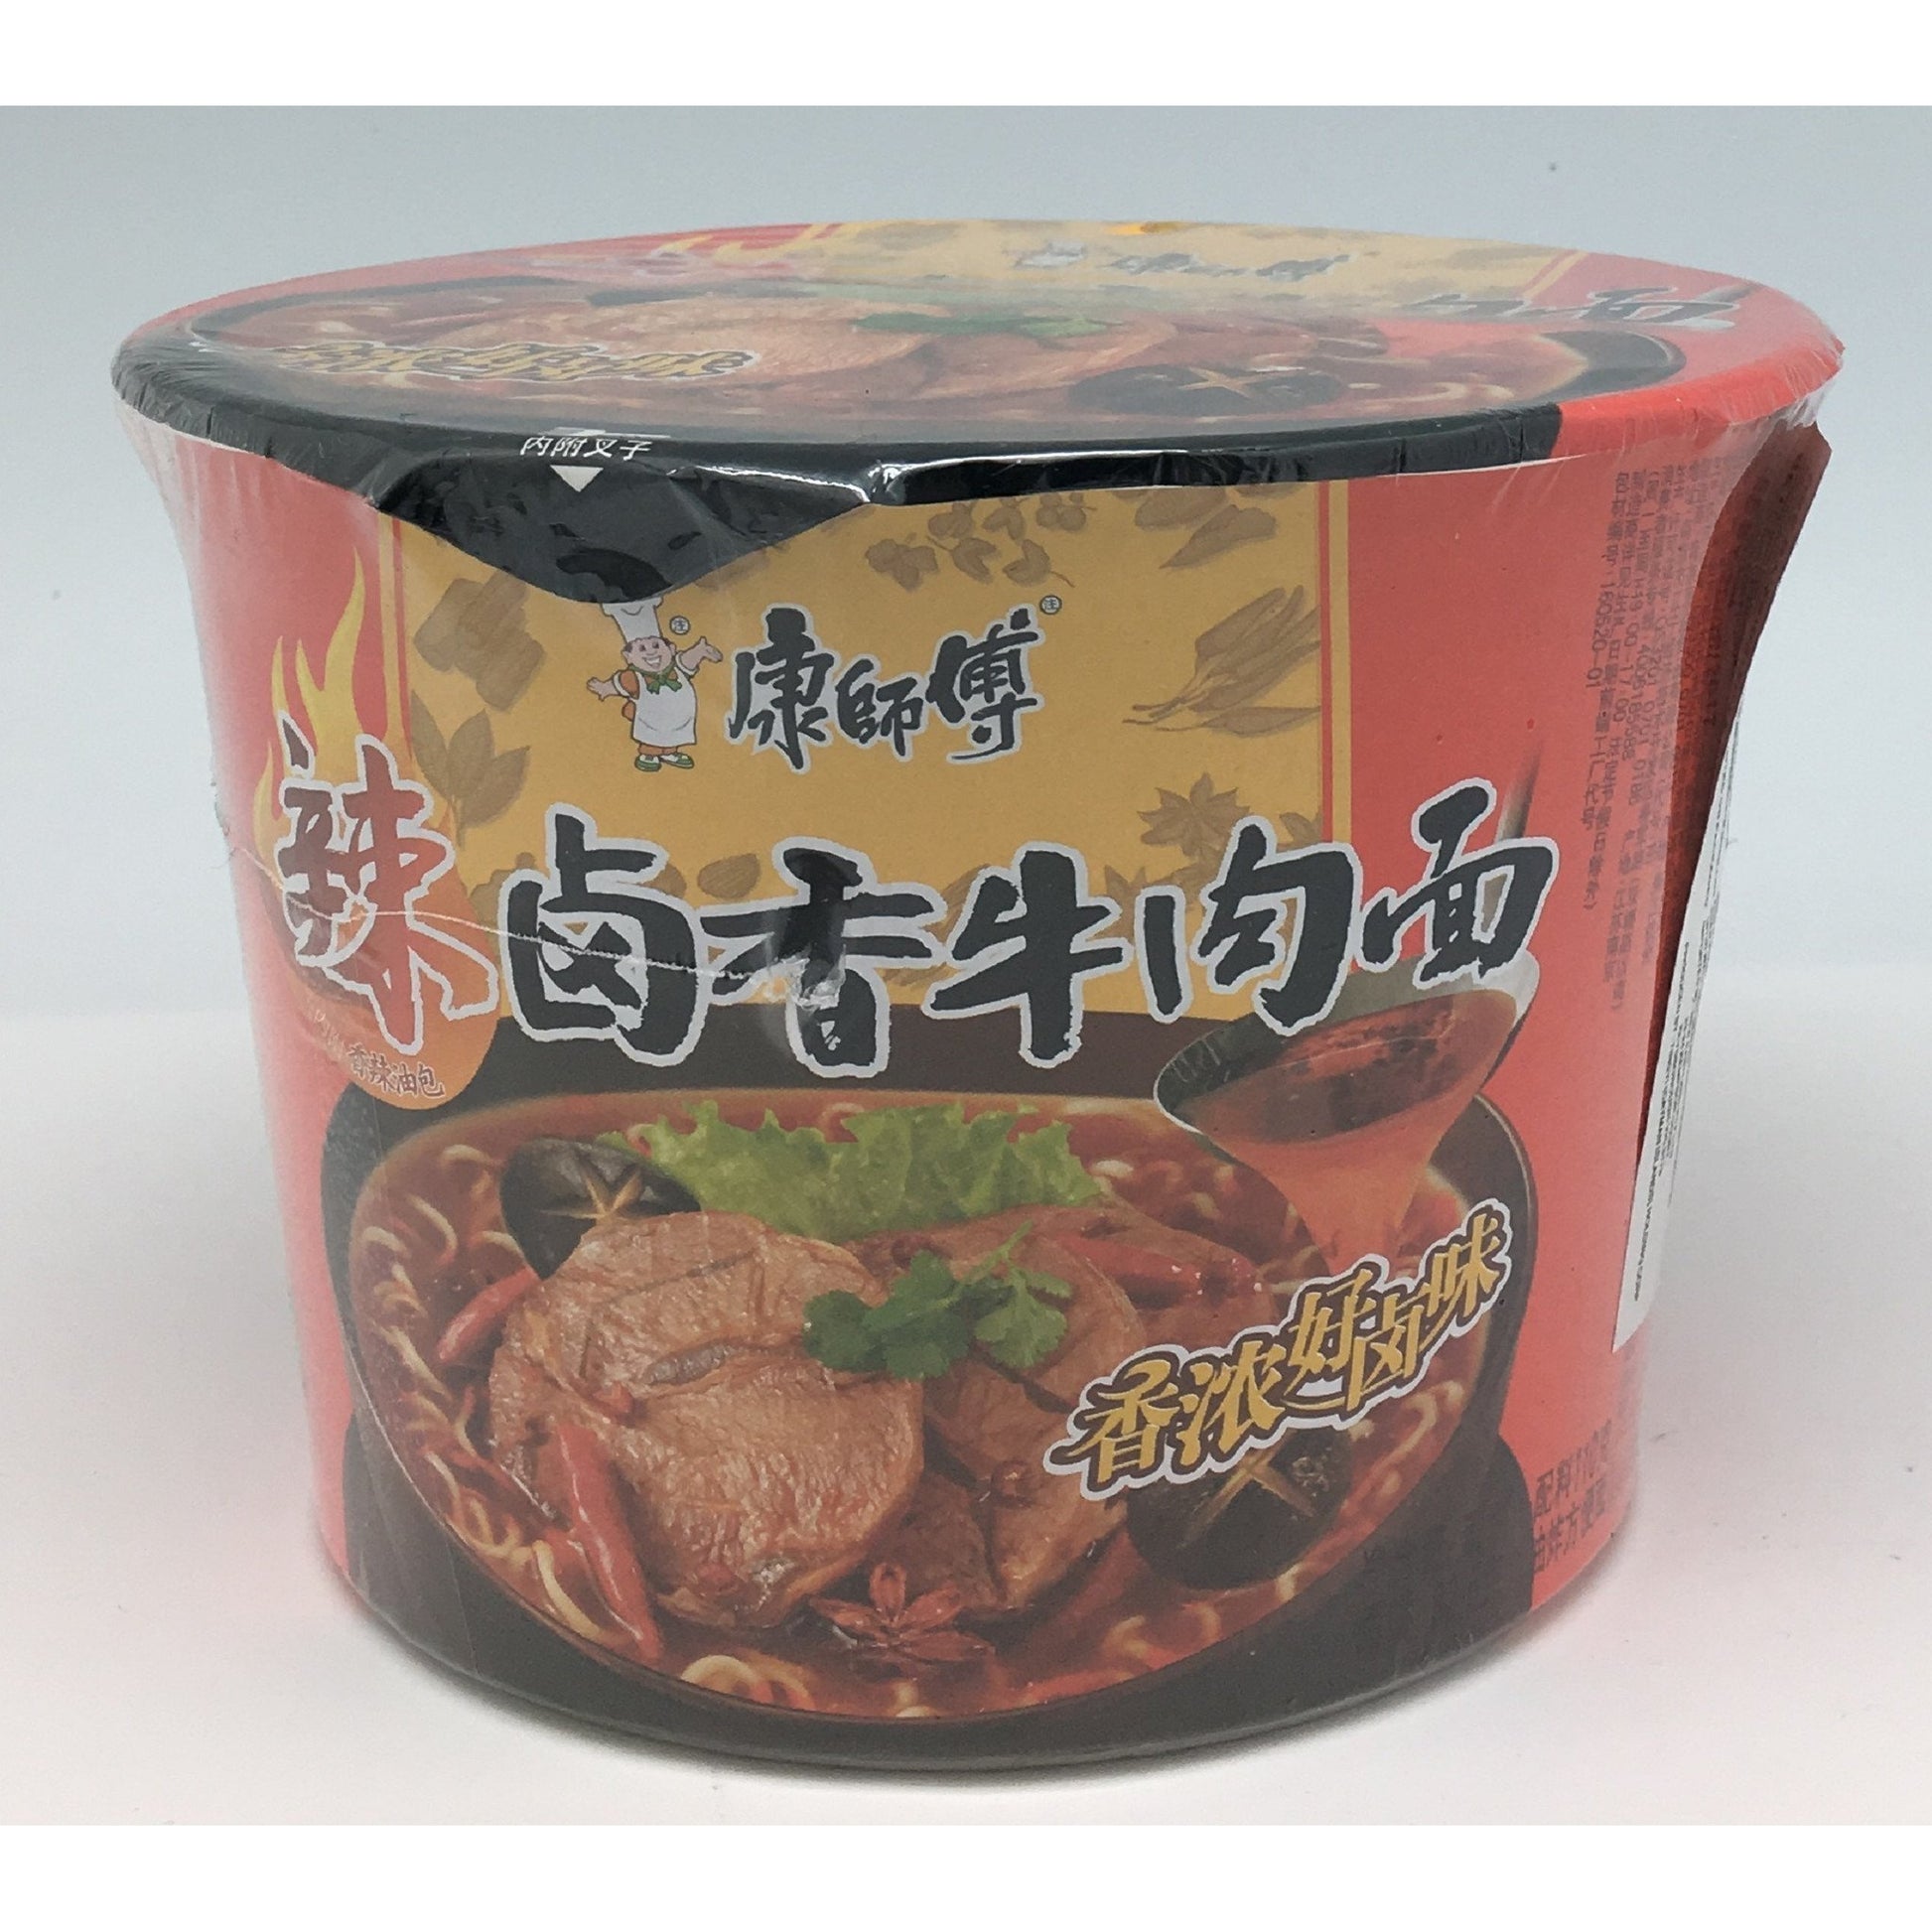 N004BH Kon Brand - Instant Ramen Noodle Bowl 126g - 12 bowl / 1 CTN - New Eastland Pty Ltd - Asian food wholesalers